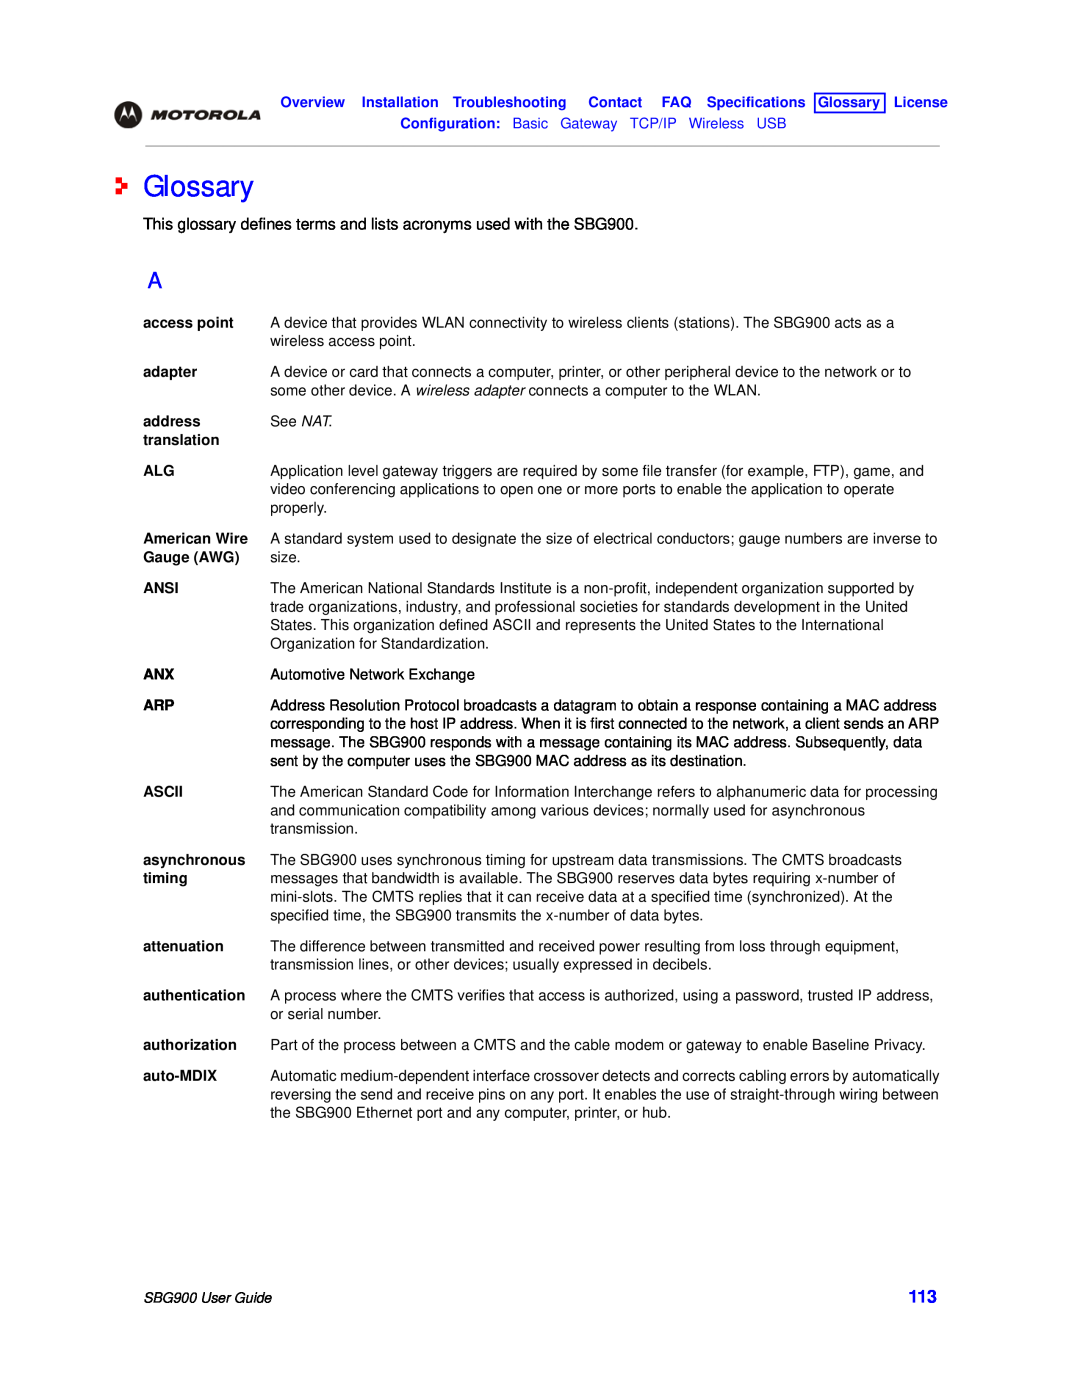 Motorola manual Glossary, Configuration Basic Gateway TCP/IP Wireless USB, SBG900 User Guide 